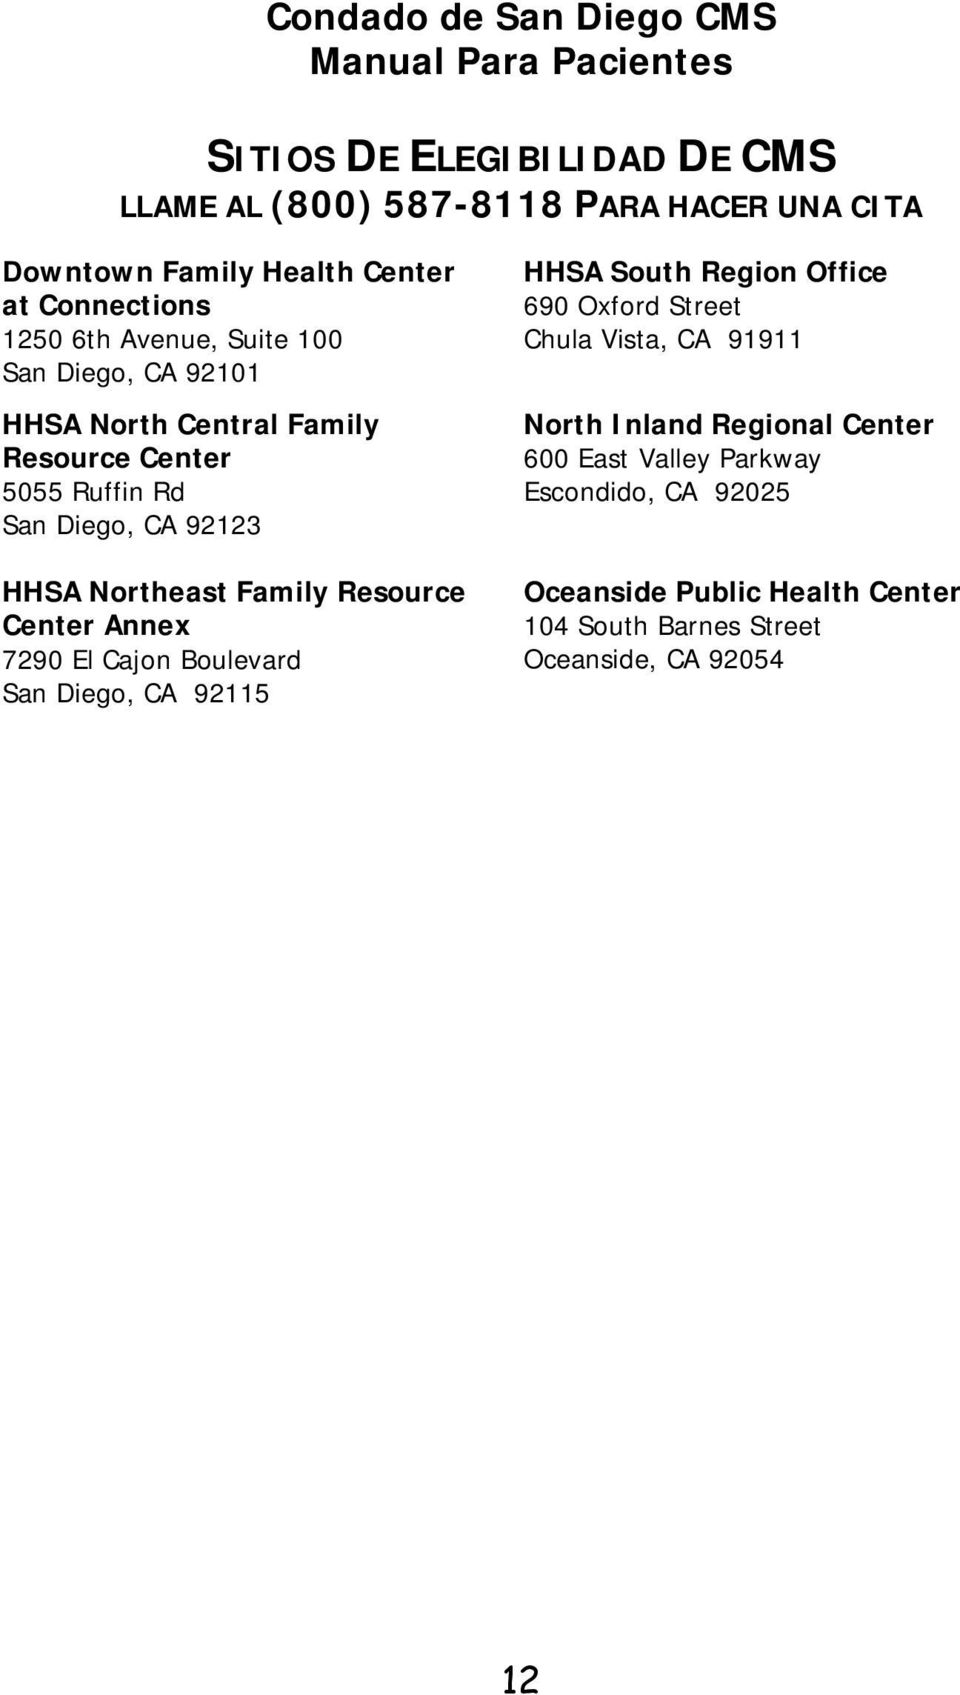 Northeast Family Resource Center Annex 7290 El Cajon Boulevard San Diego, CA 92115 HHSA South Region Office 690 Oxford Street Chula Vista, CA